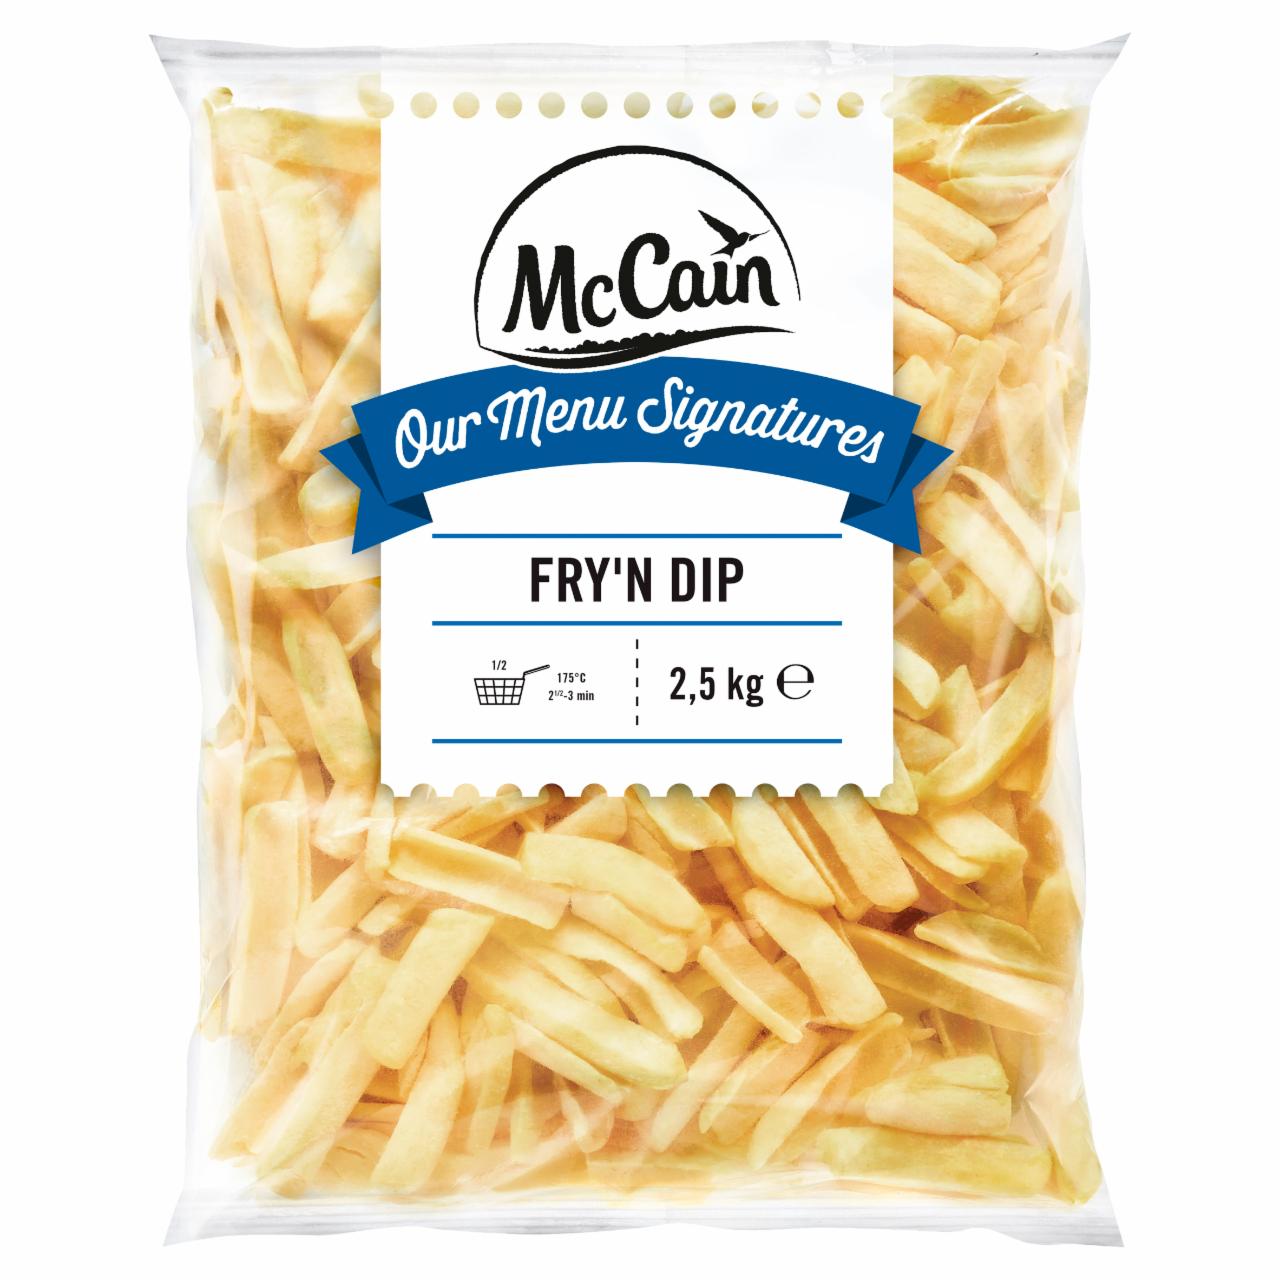 Zdjęcia - McCain Our Menu Signatures Fry'N Dip Frytki w kształcie rynienek 2,5 kg